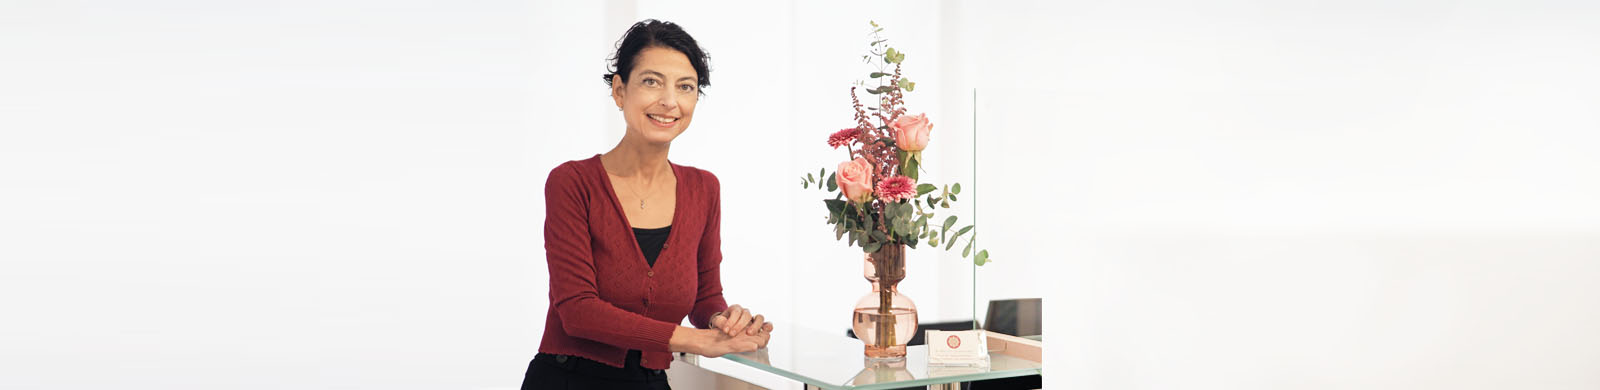 Frau Dr. Elif Çalışkan-Erle an der Empfangstheke mit Blumen